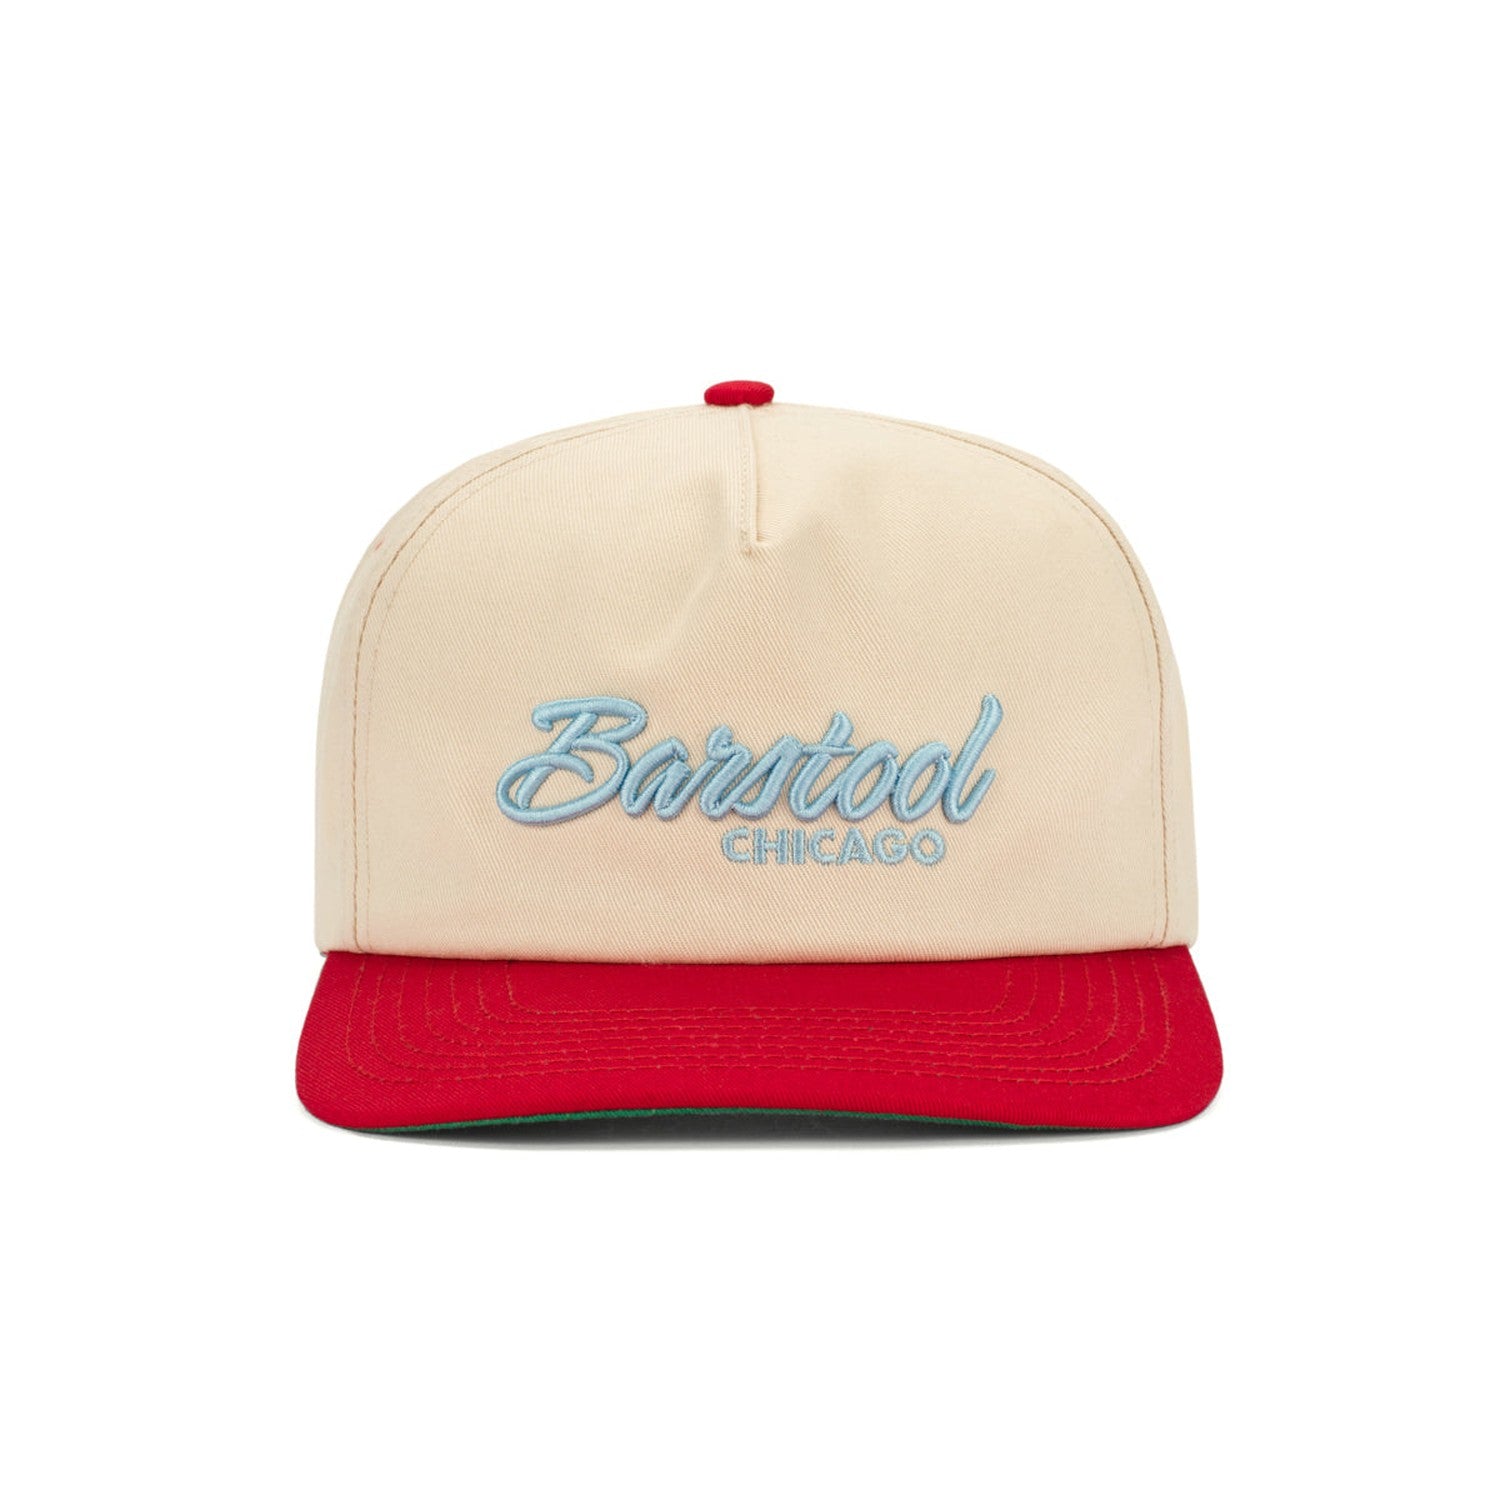 Barstool Chicago Retro Snapback Hat | Barstool Chicago Red